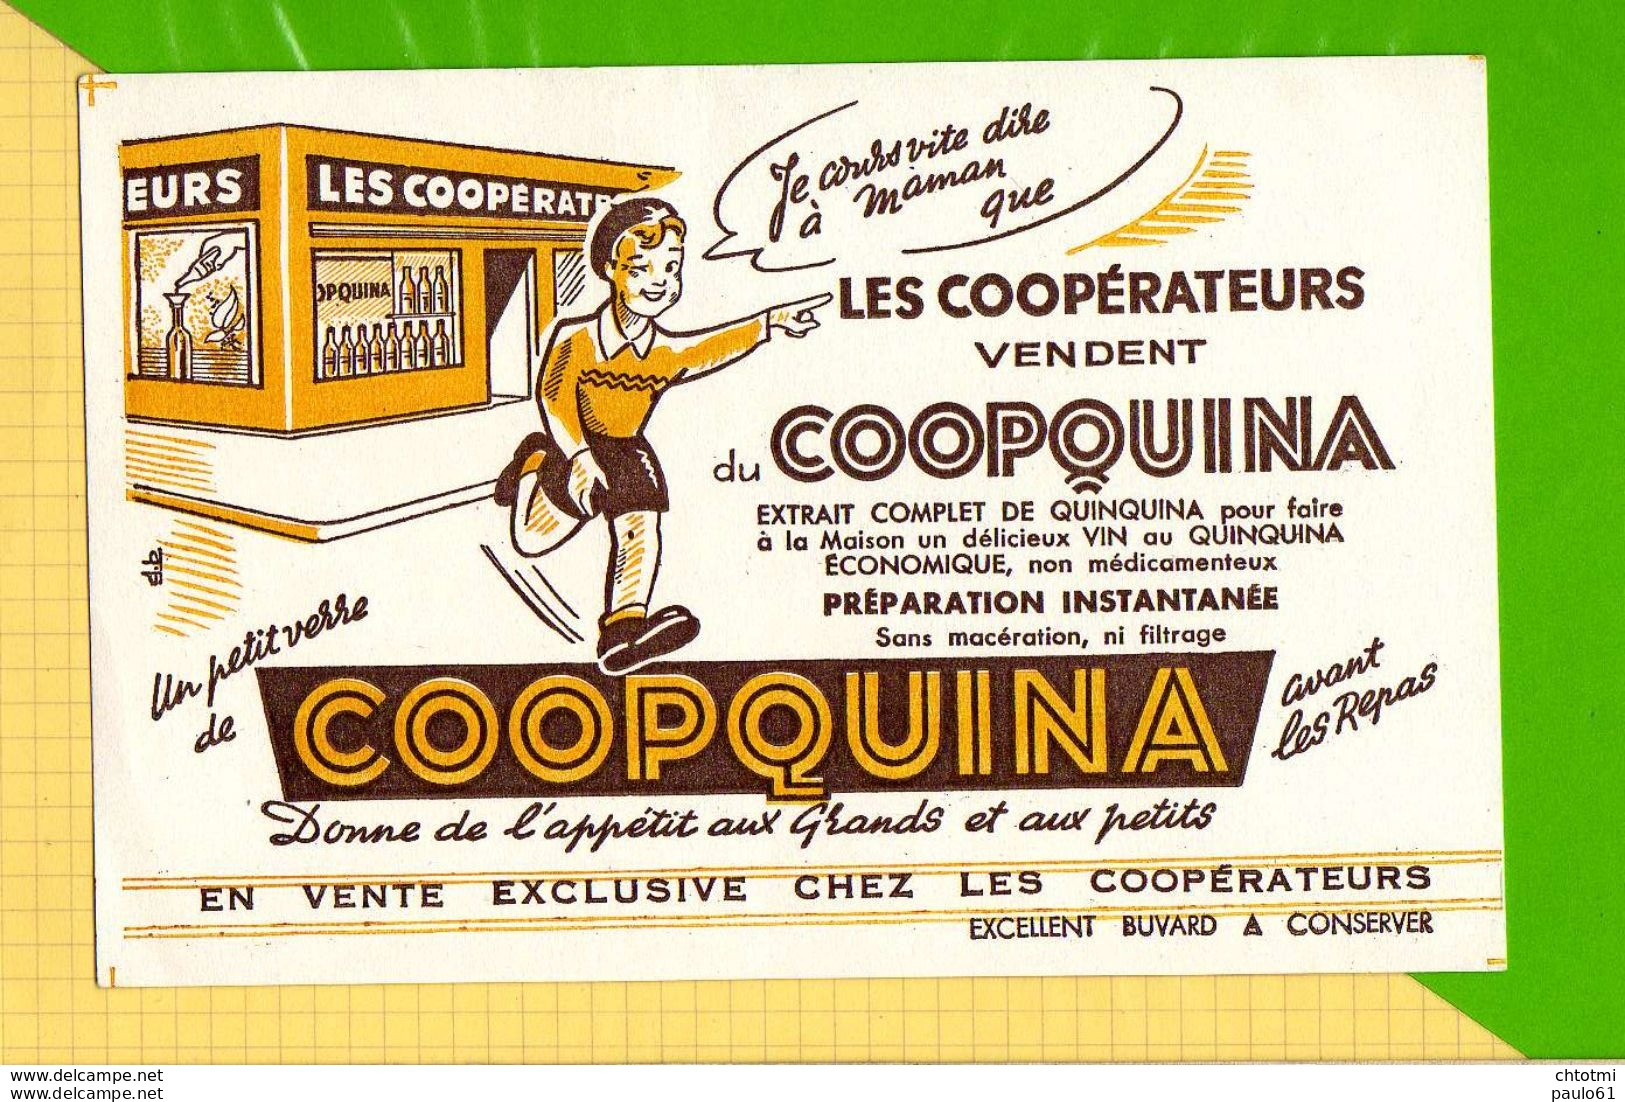 BUVARD & Blotting Paper : Les Cooperateurs Vendent COOPQUINA - Liquor & Beer